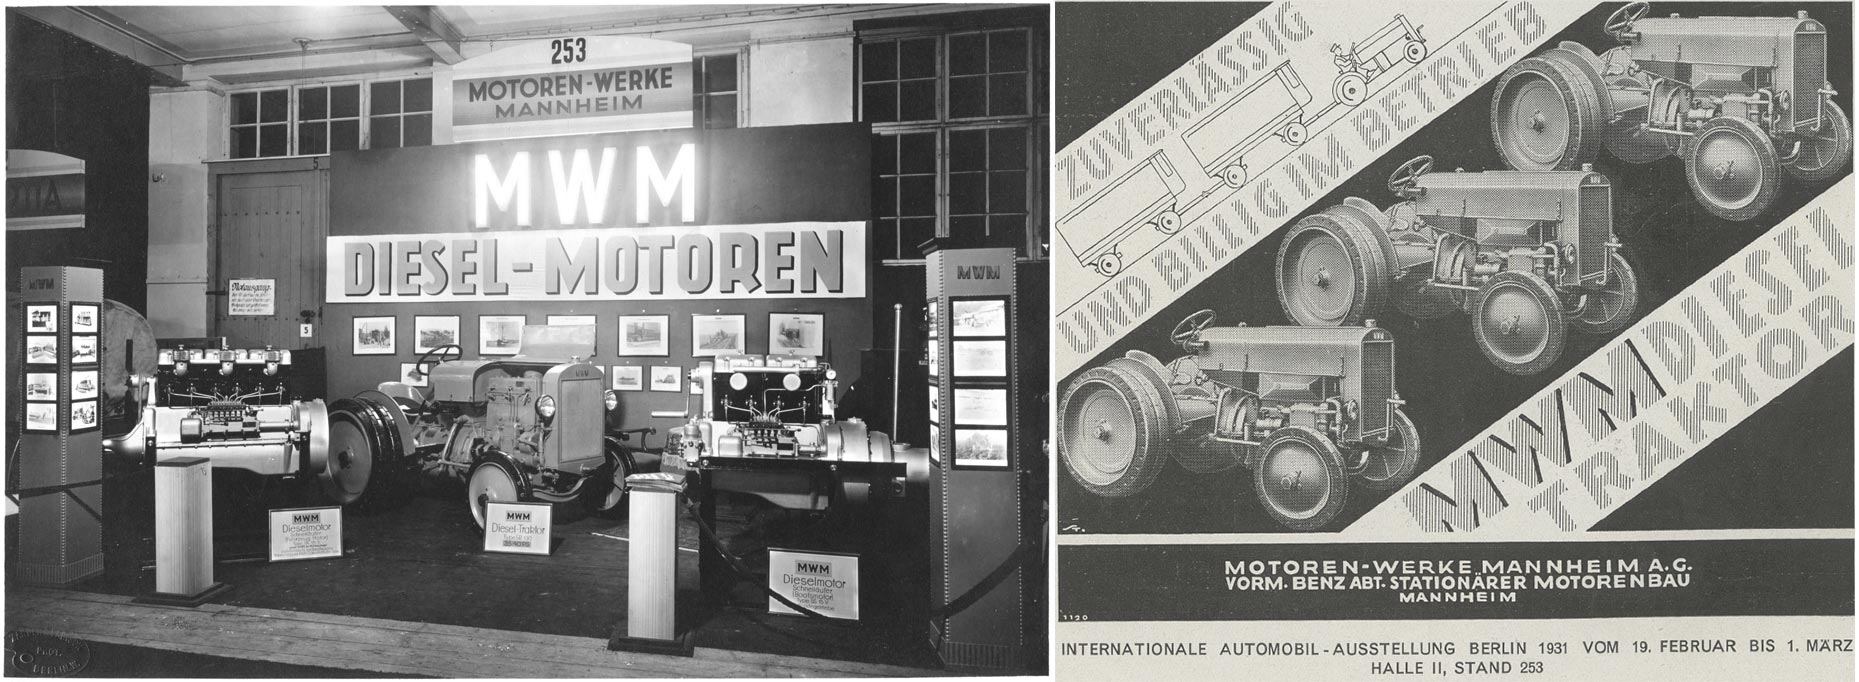 nternationale Automobil Ausstellung Berlin 1931